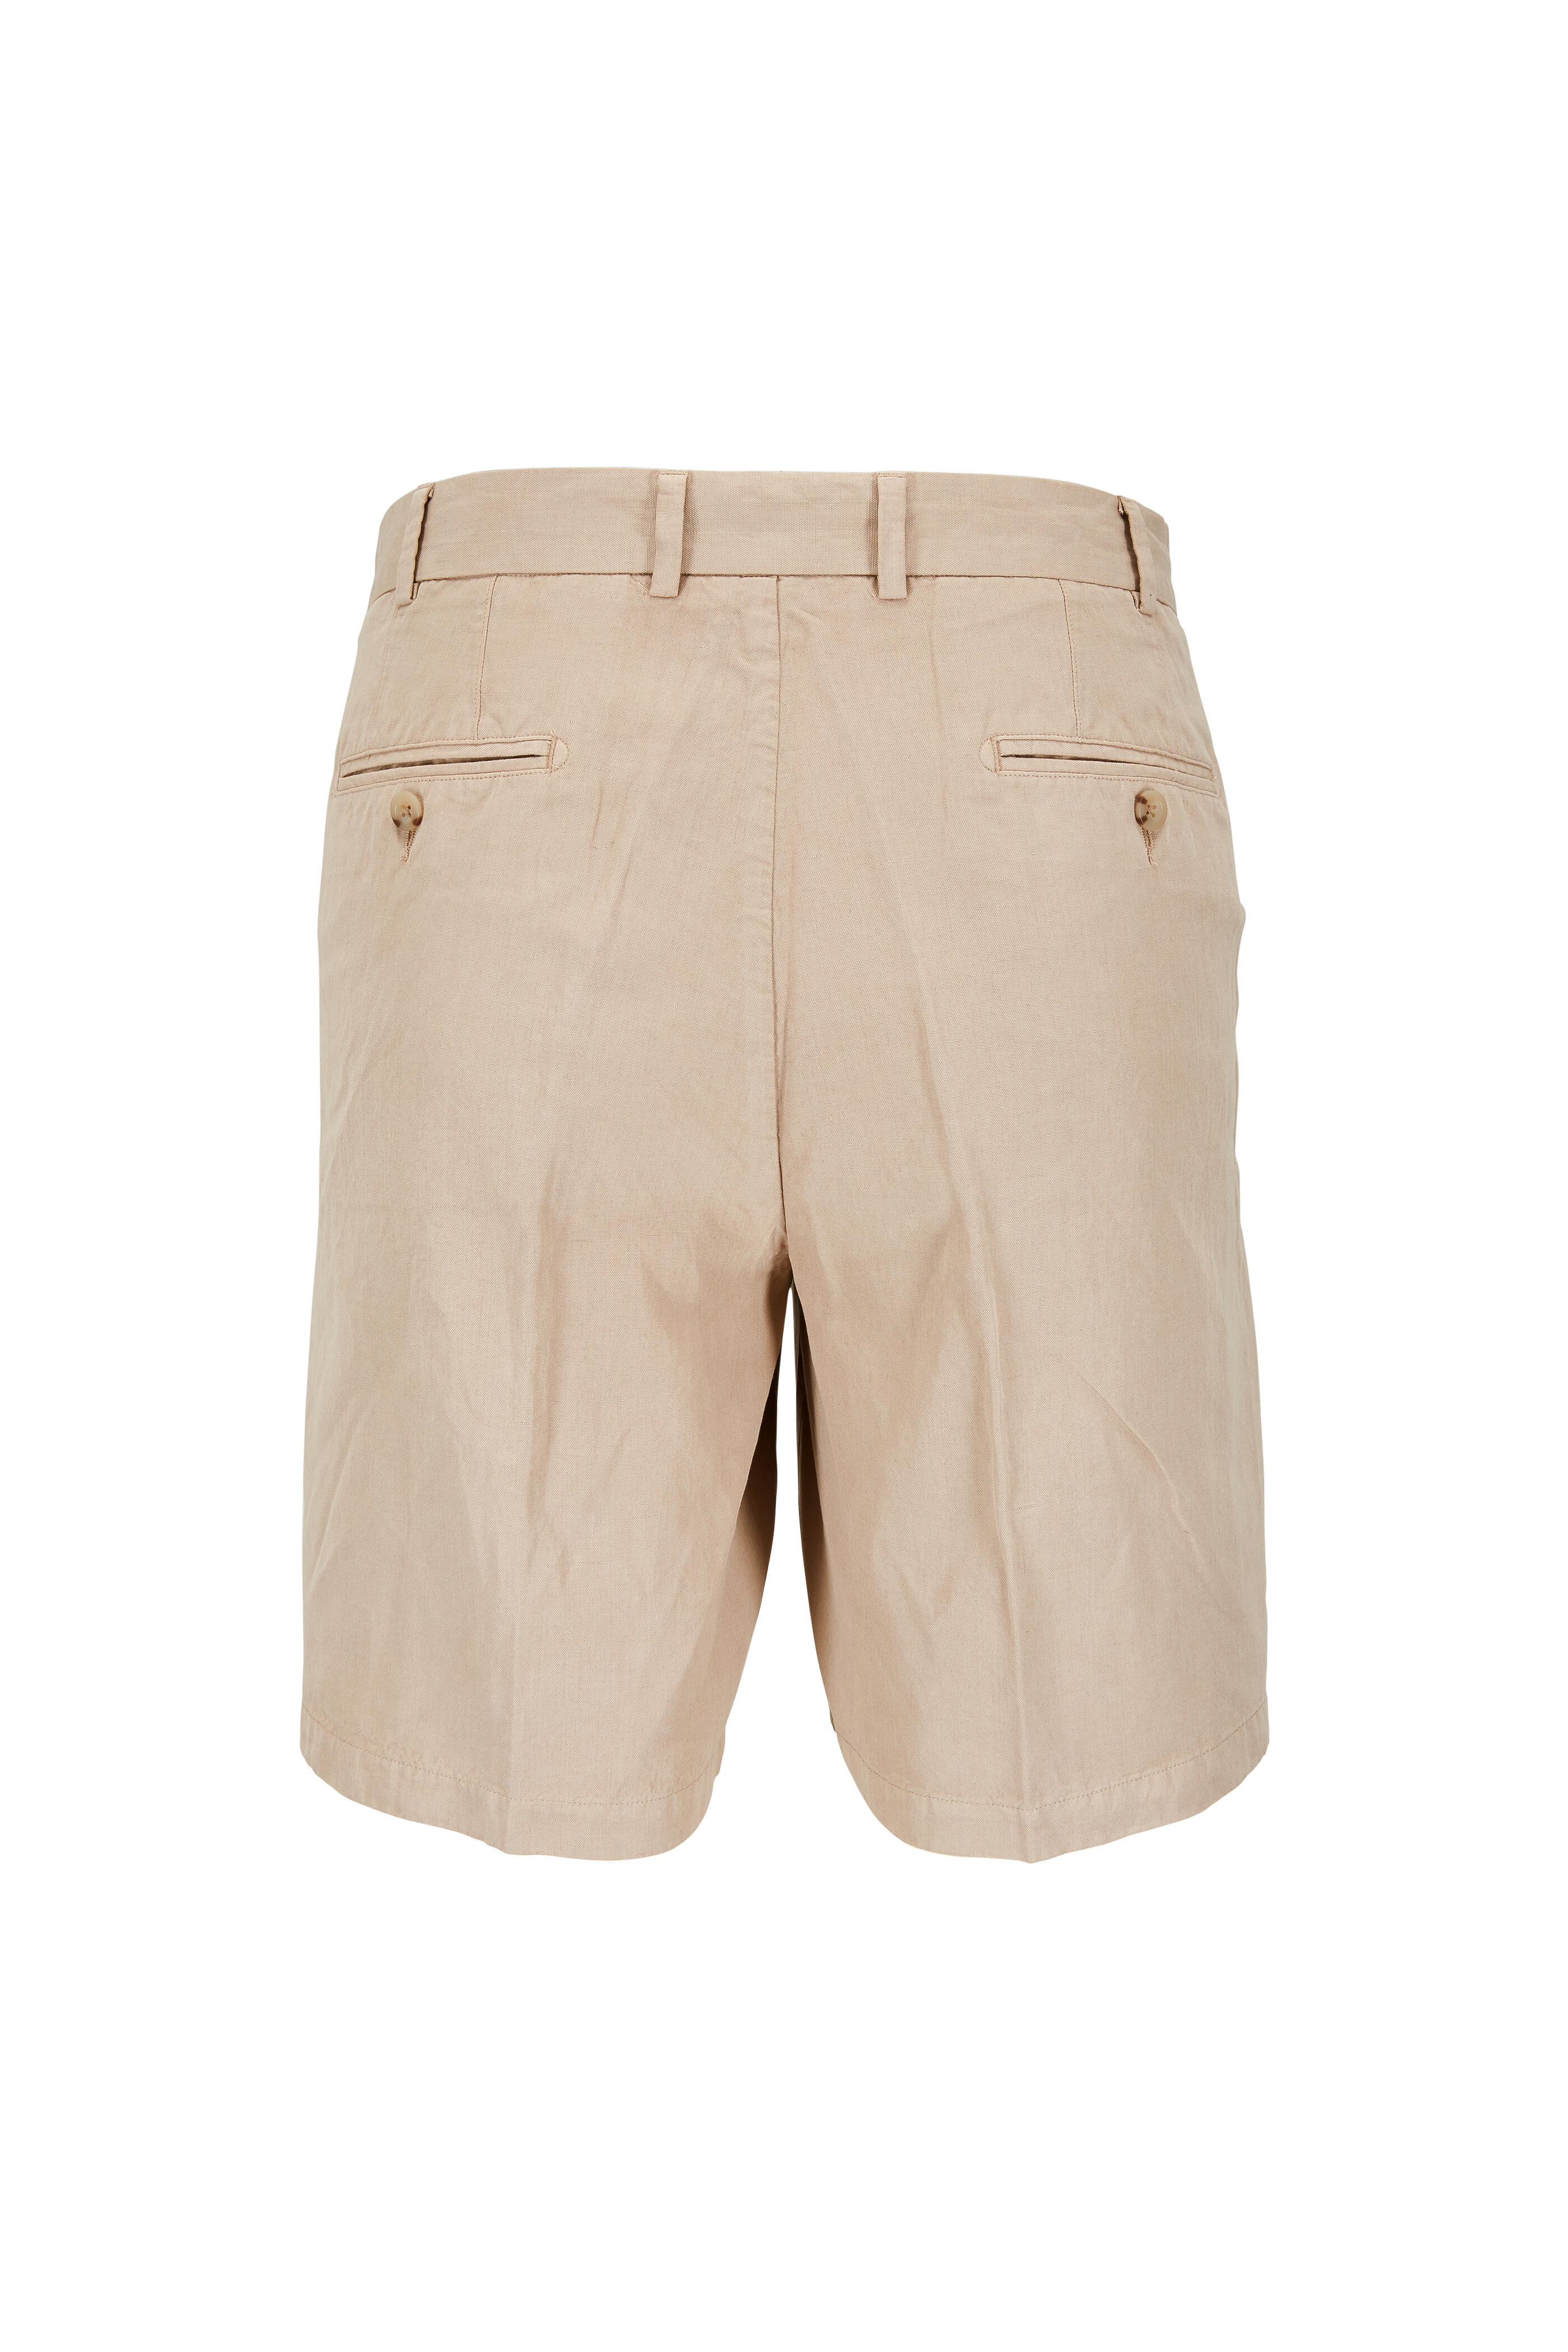 Peter Millar - Seaside Khaki Linen Blend Shorts